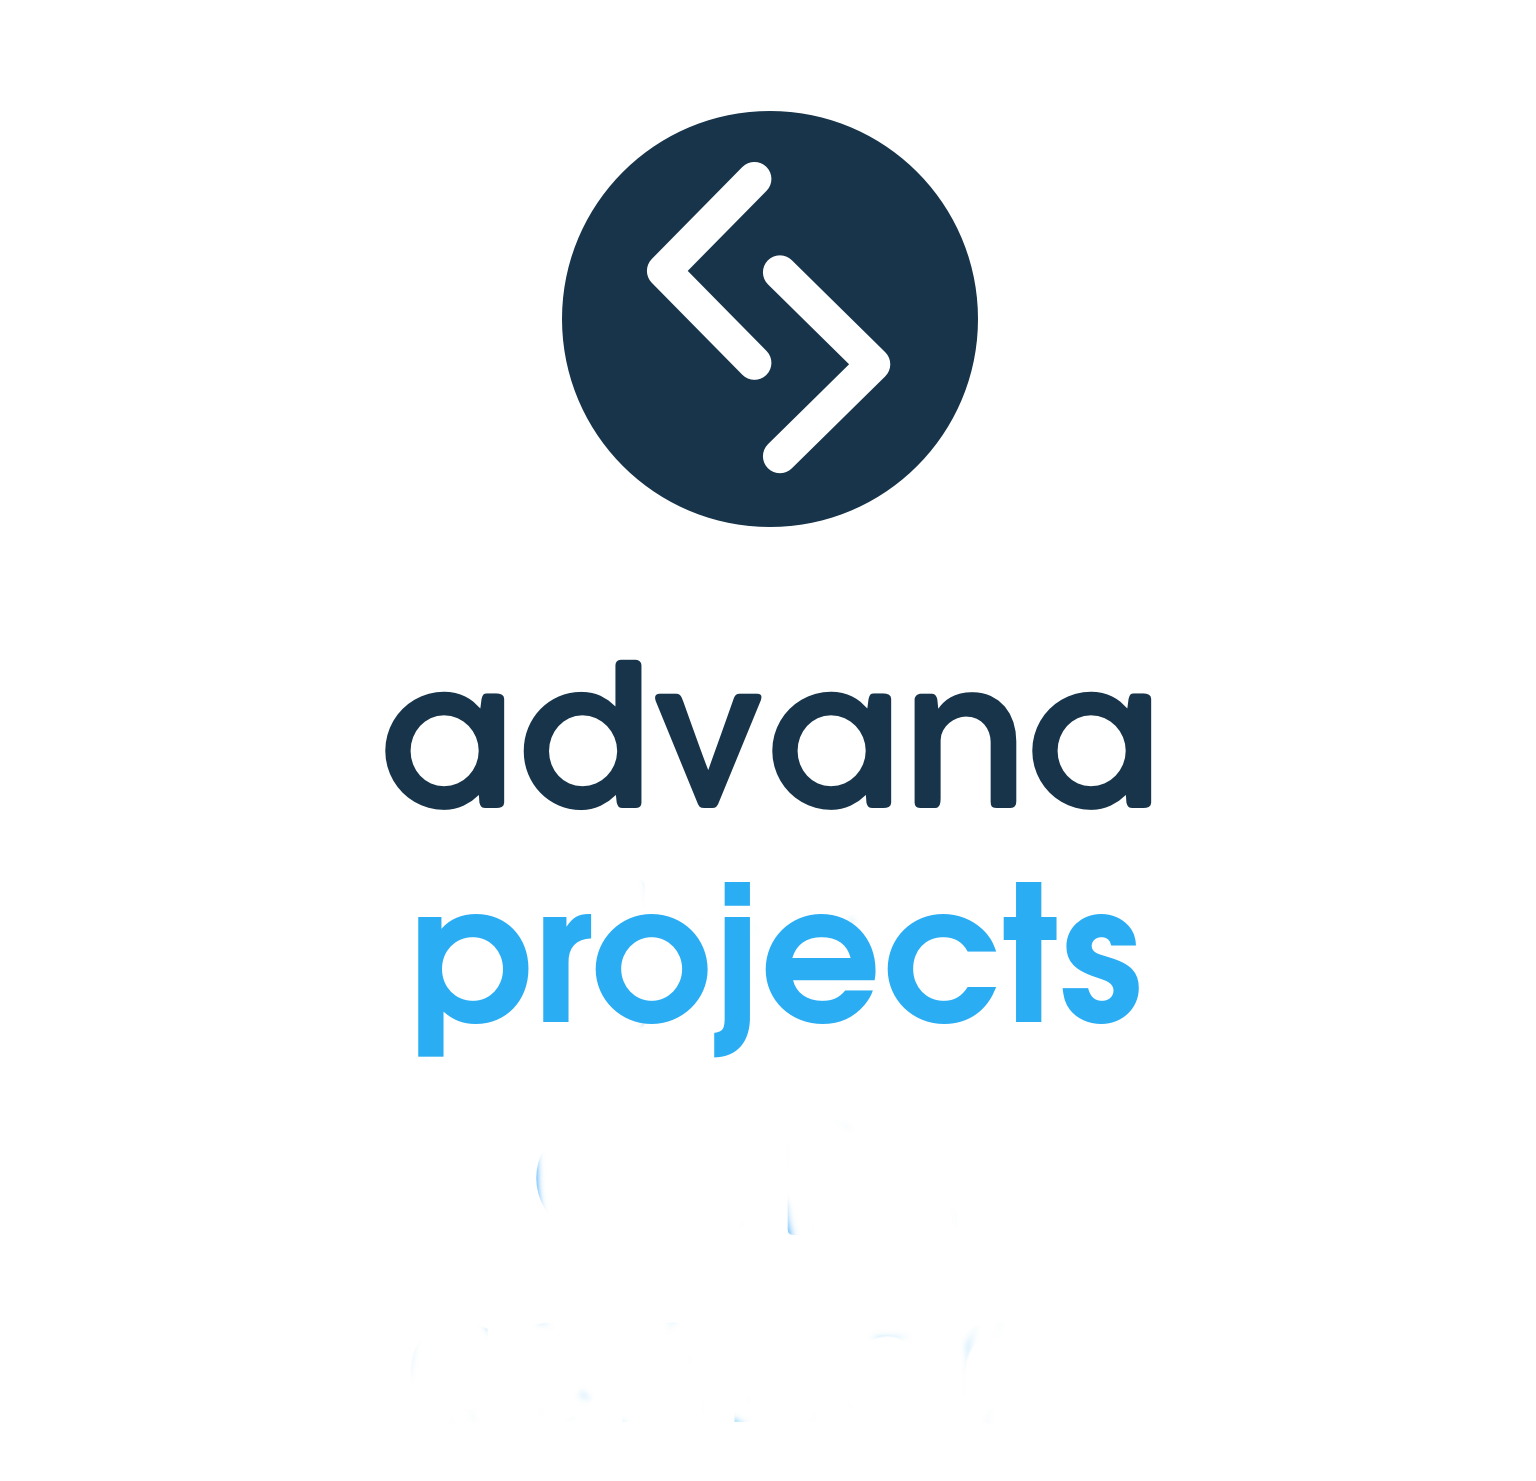 Advana projects